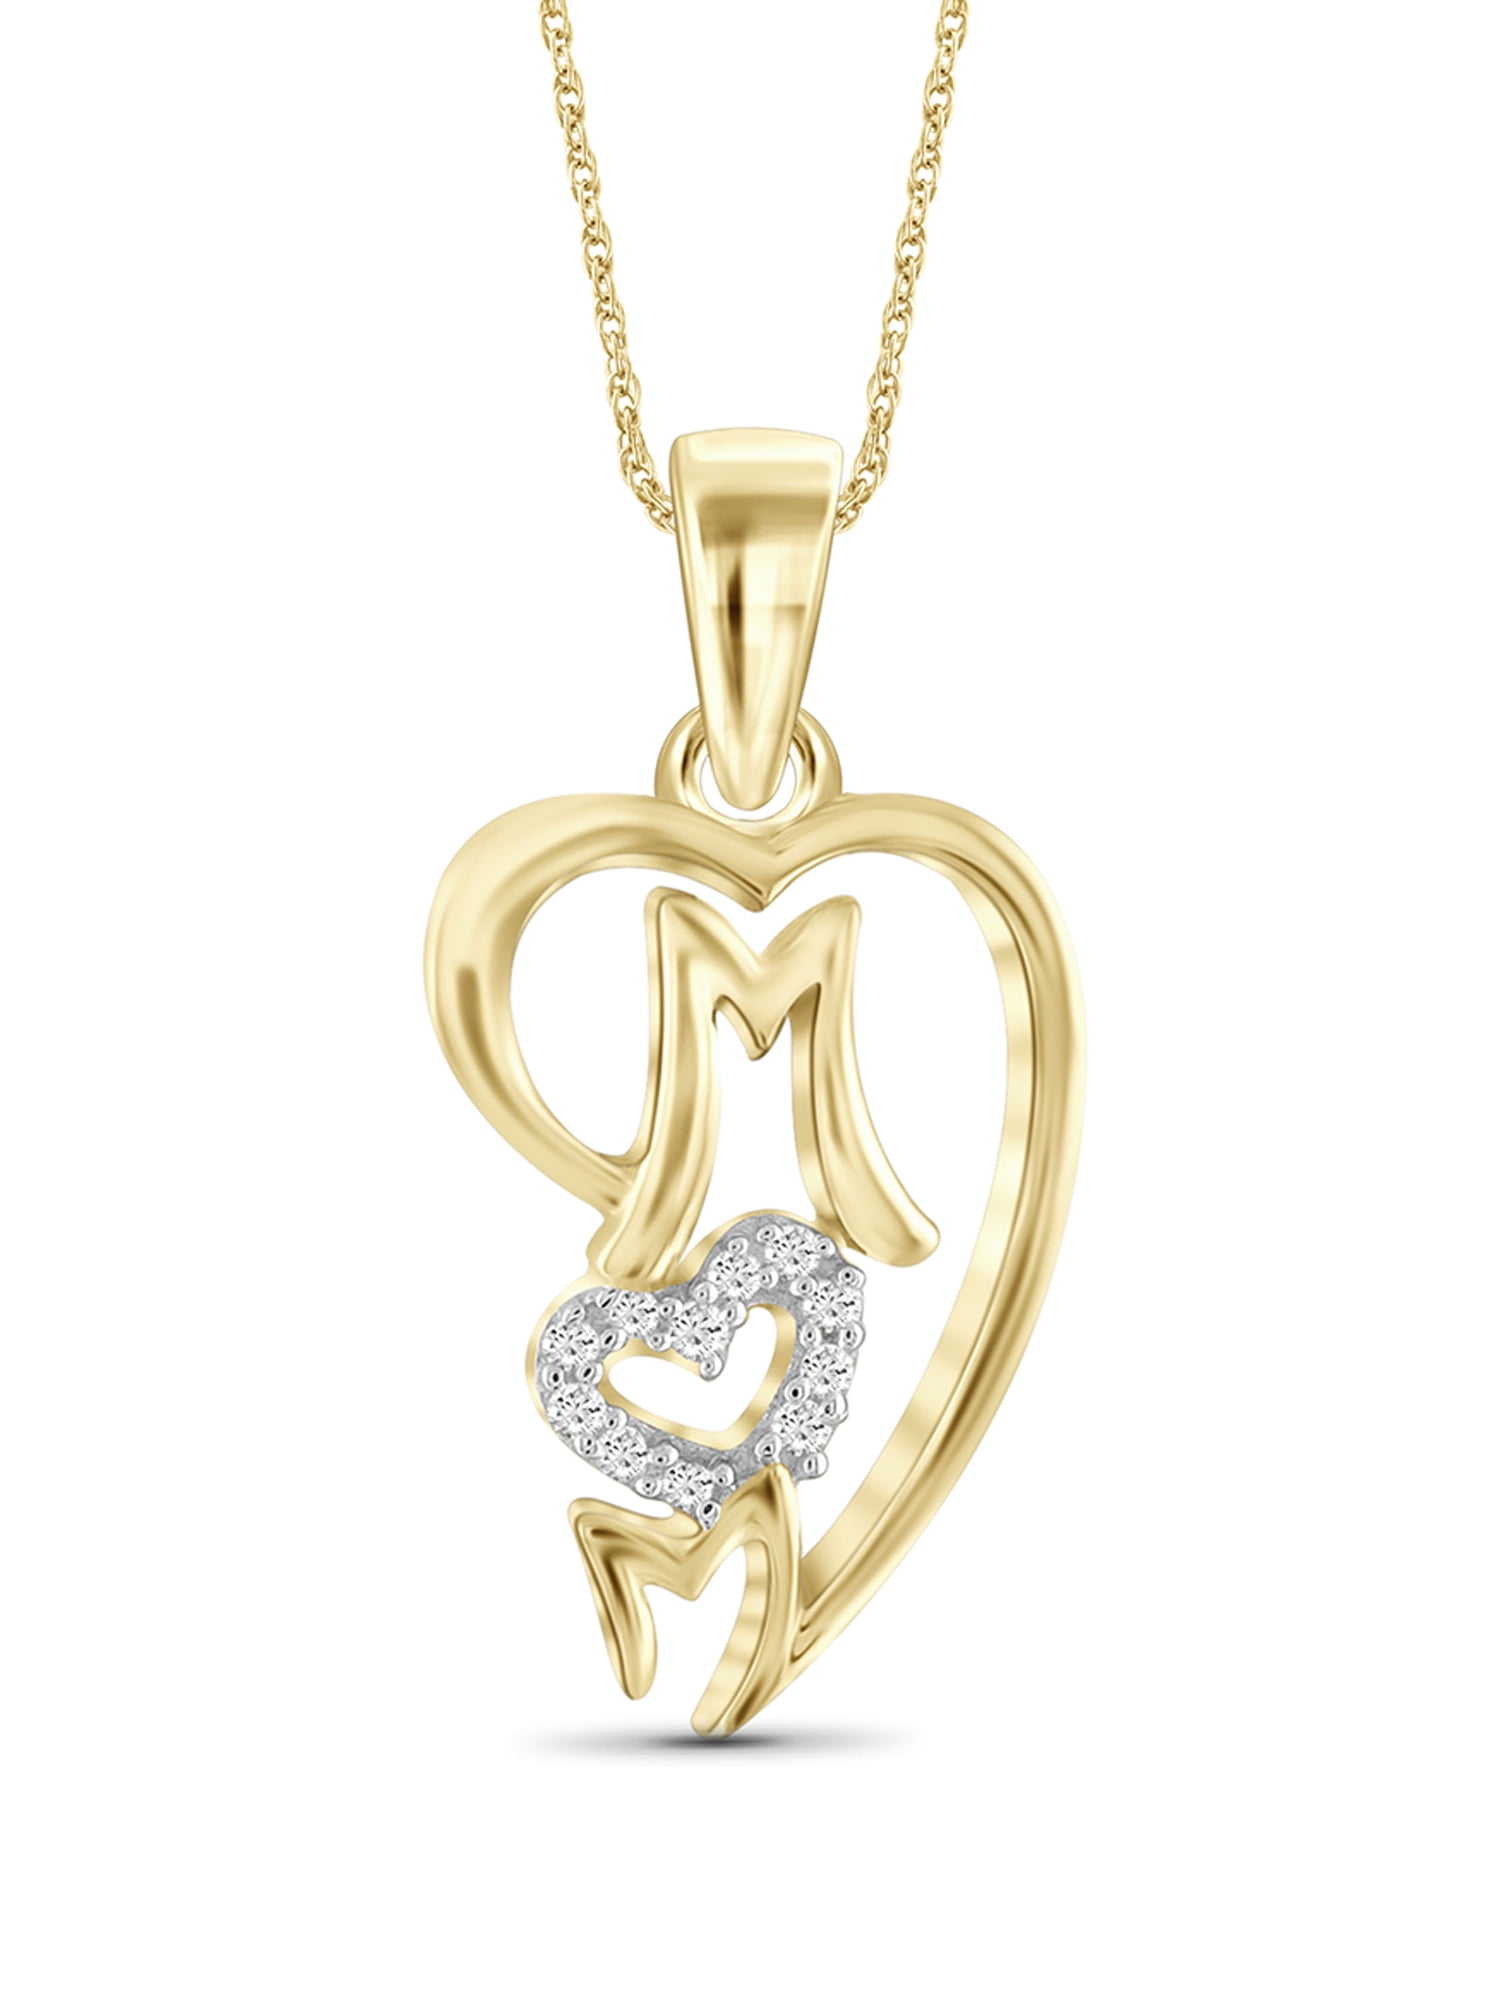 Jewelmak 14K Gold Mother of Pearl Oval Necklace Pendant Fine